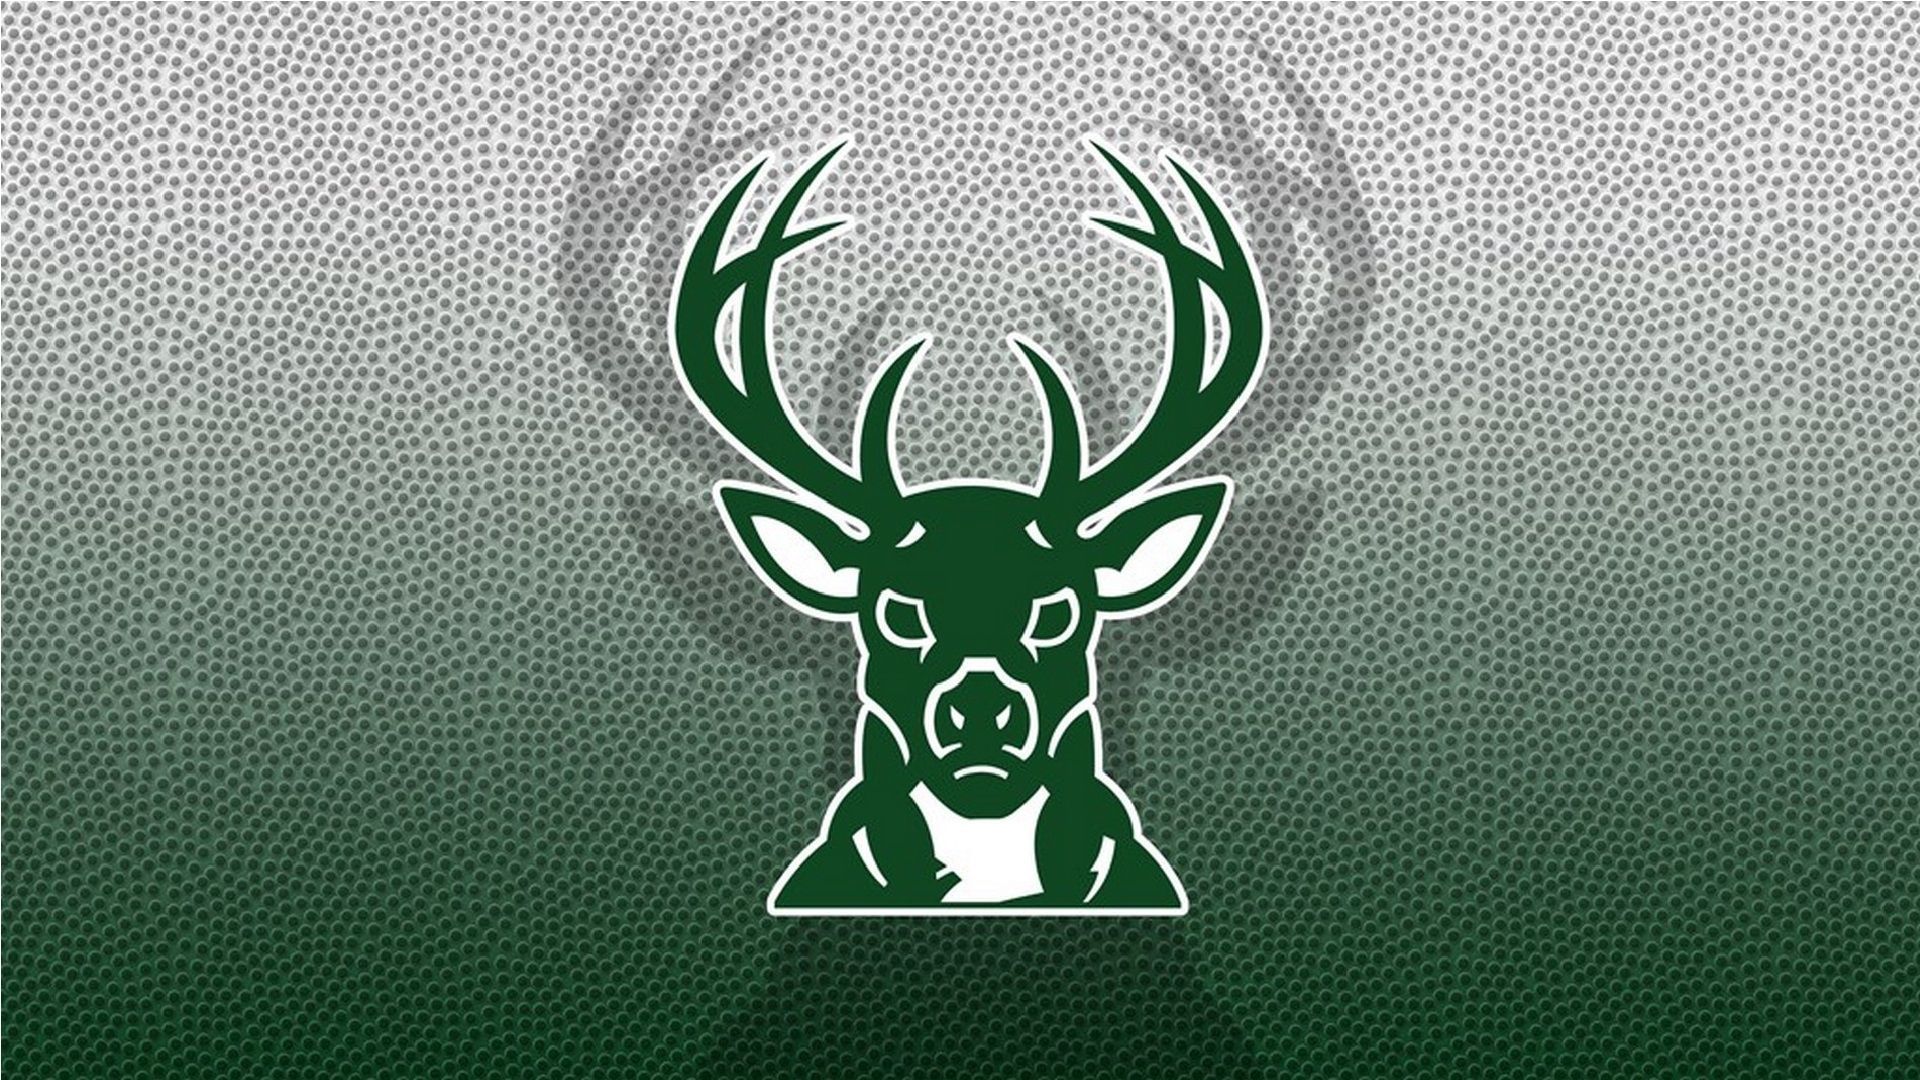 Wallpaper ID 397095  Sports Milwaukee Bucks Phone Wallpaper Basketball  Emblem NBA 1080x1920 free download